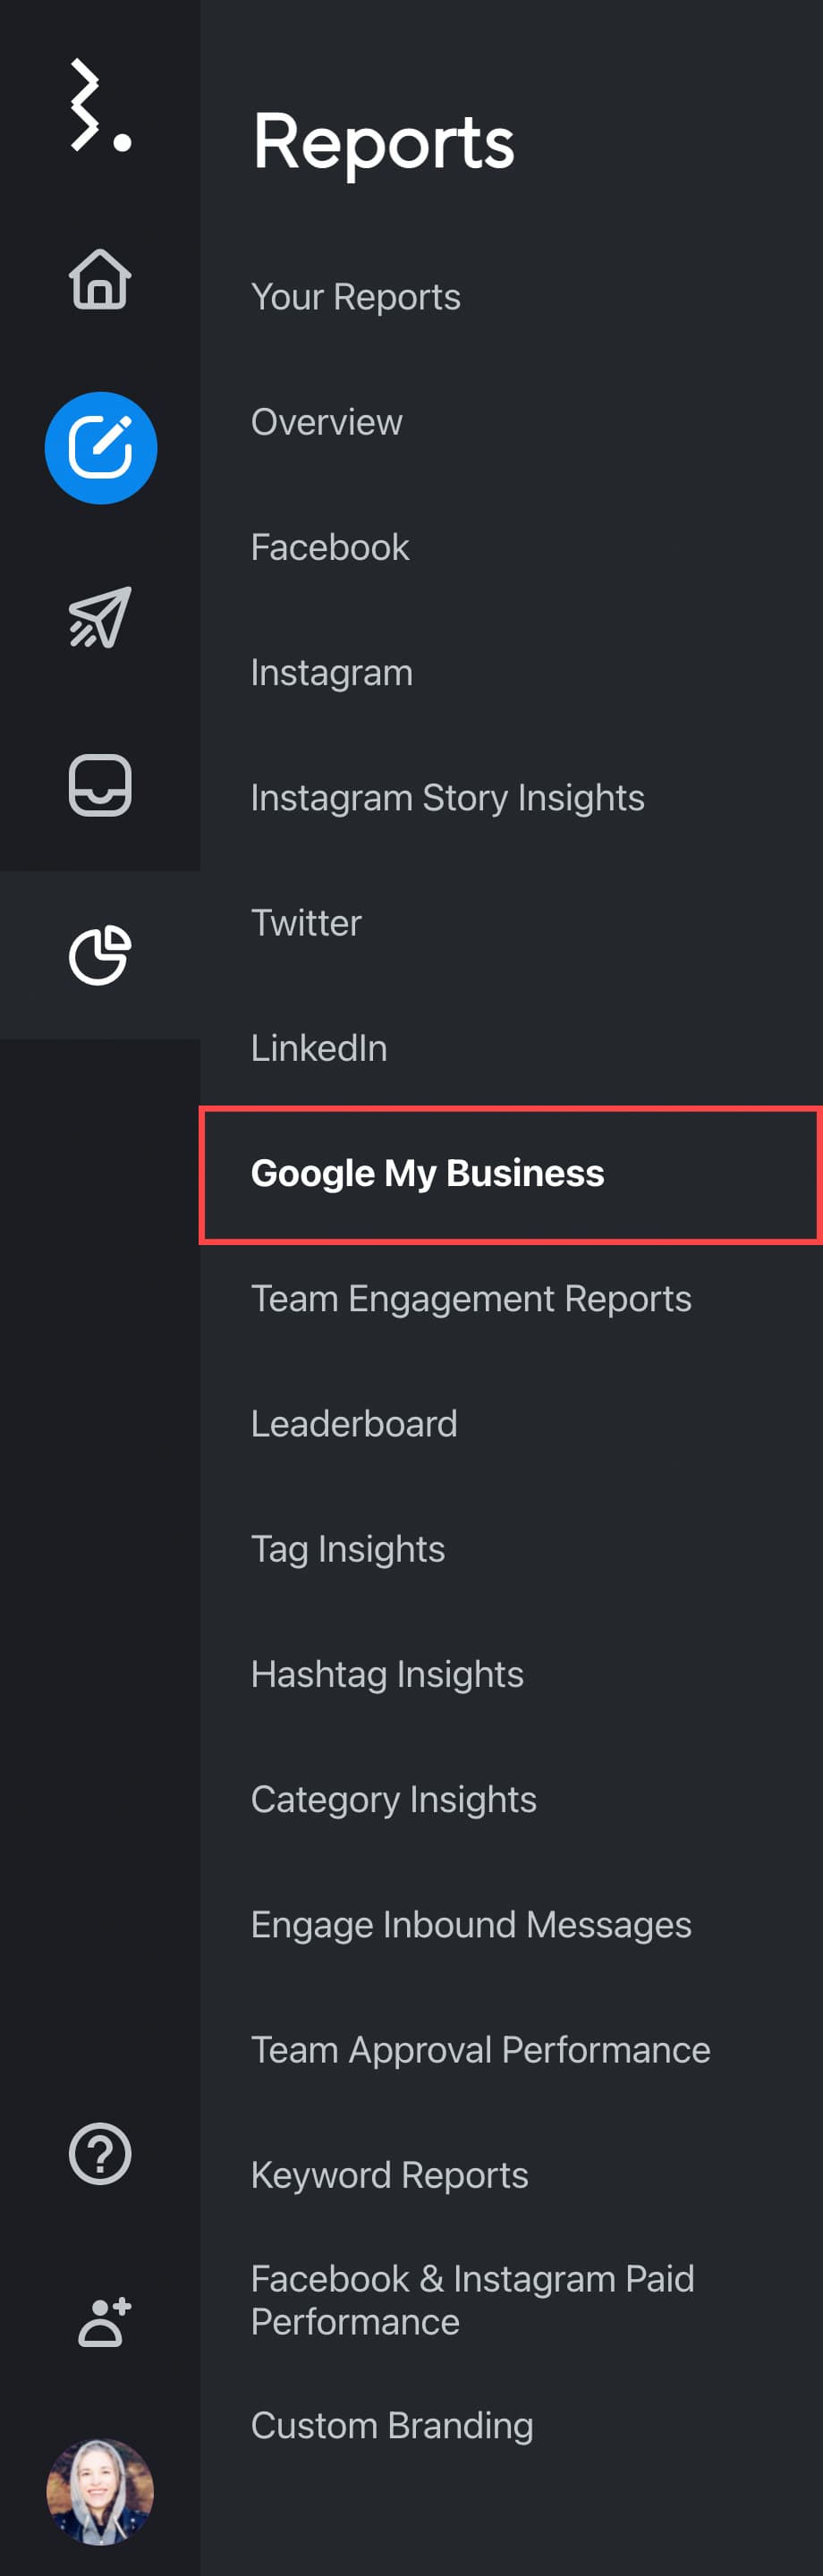 google_my_business_report.jpg